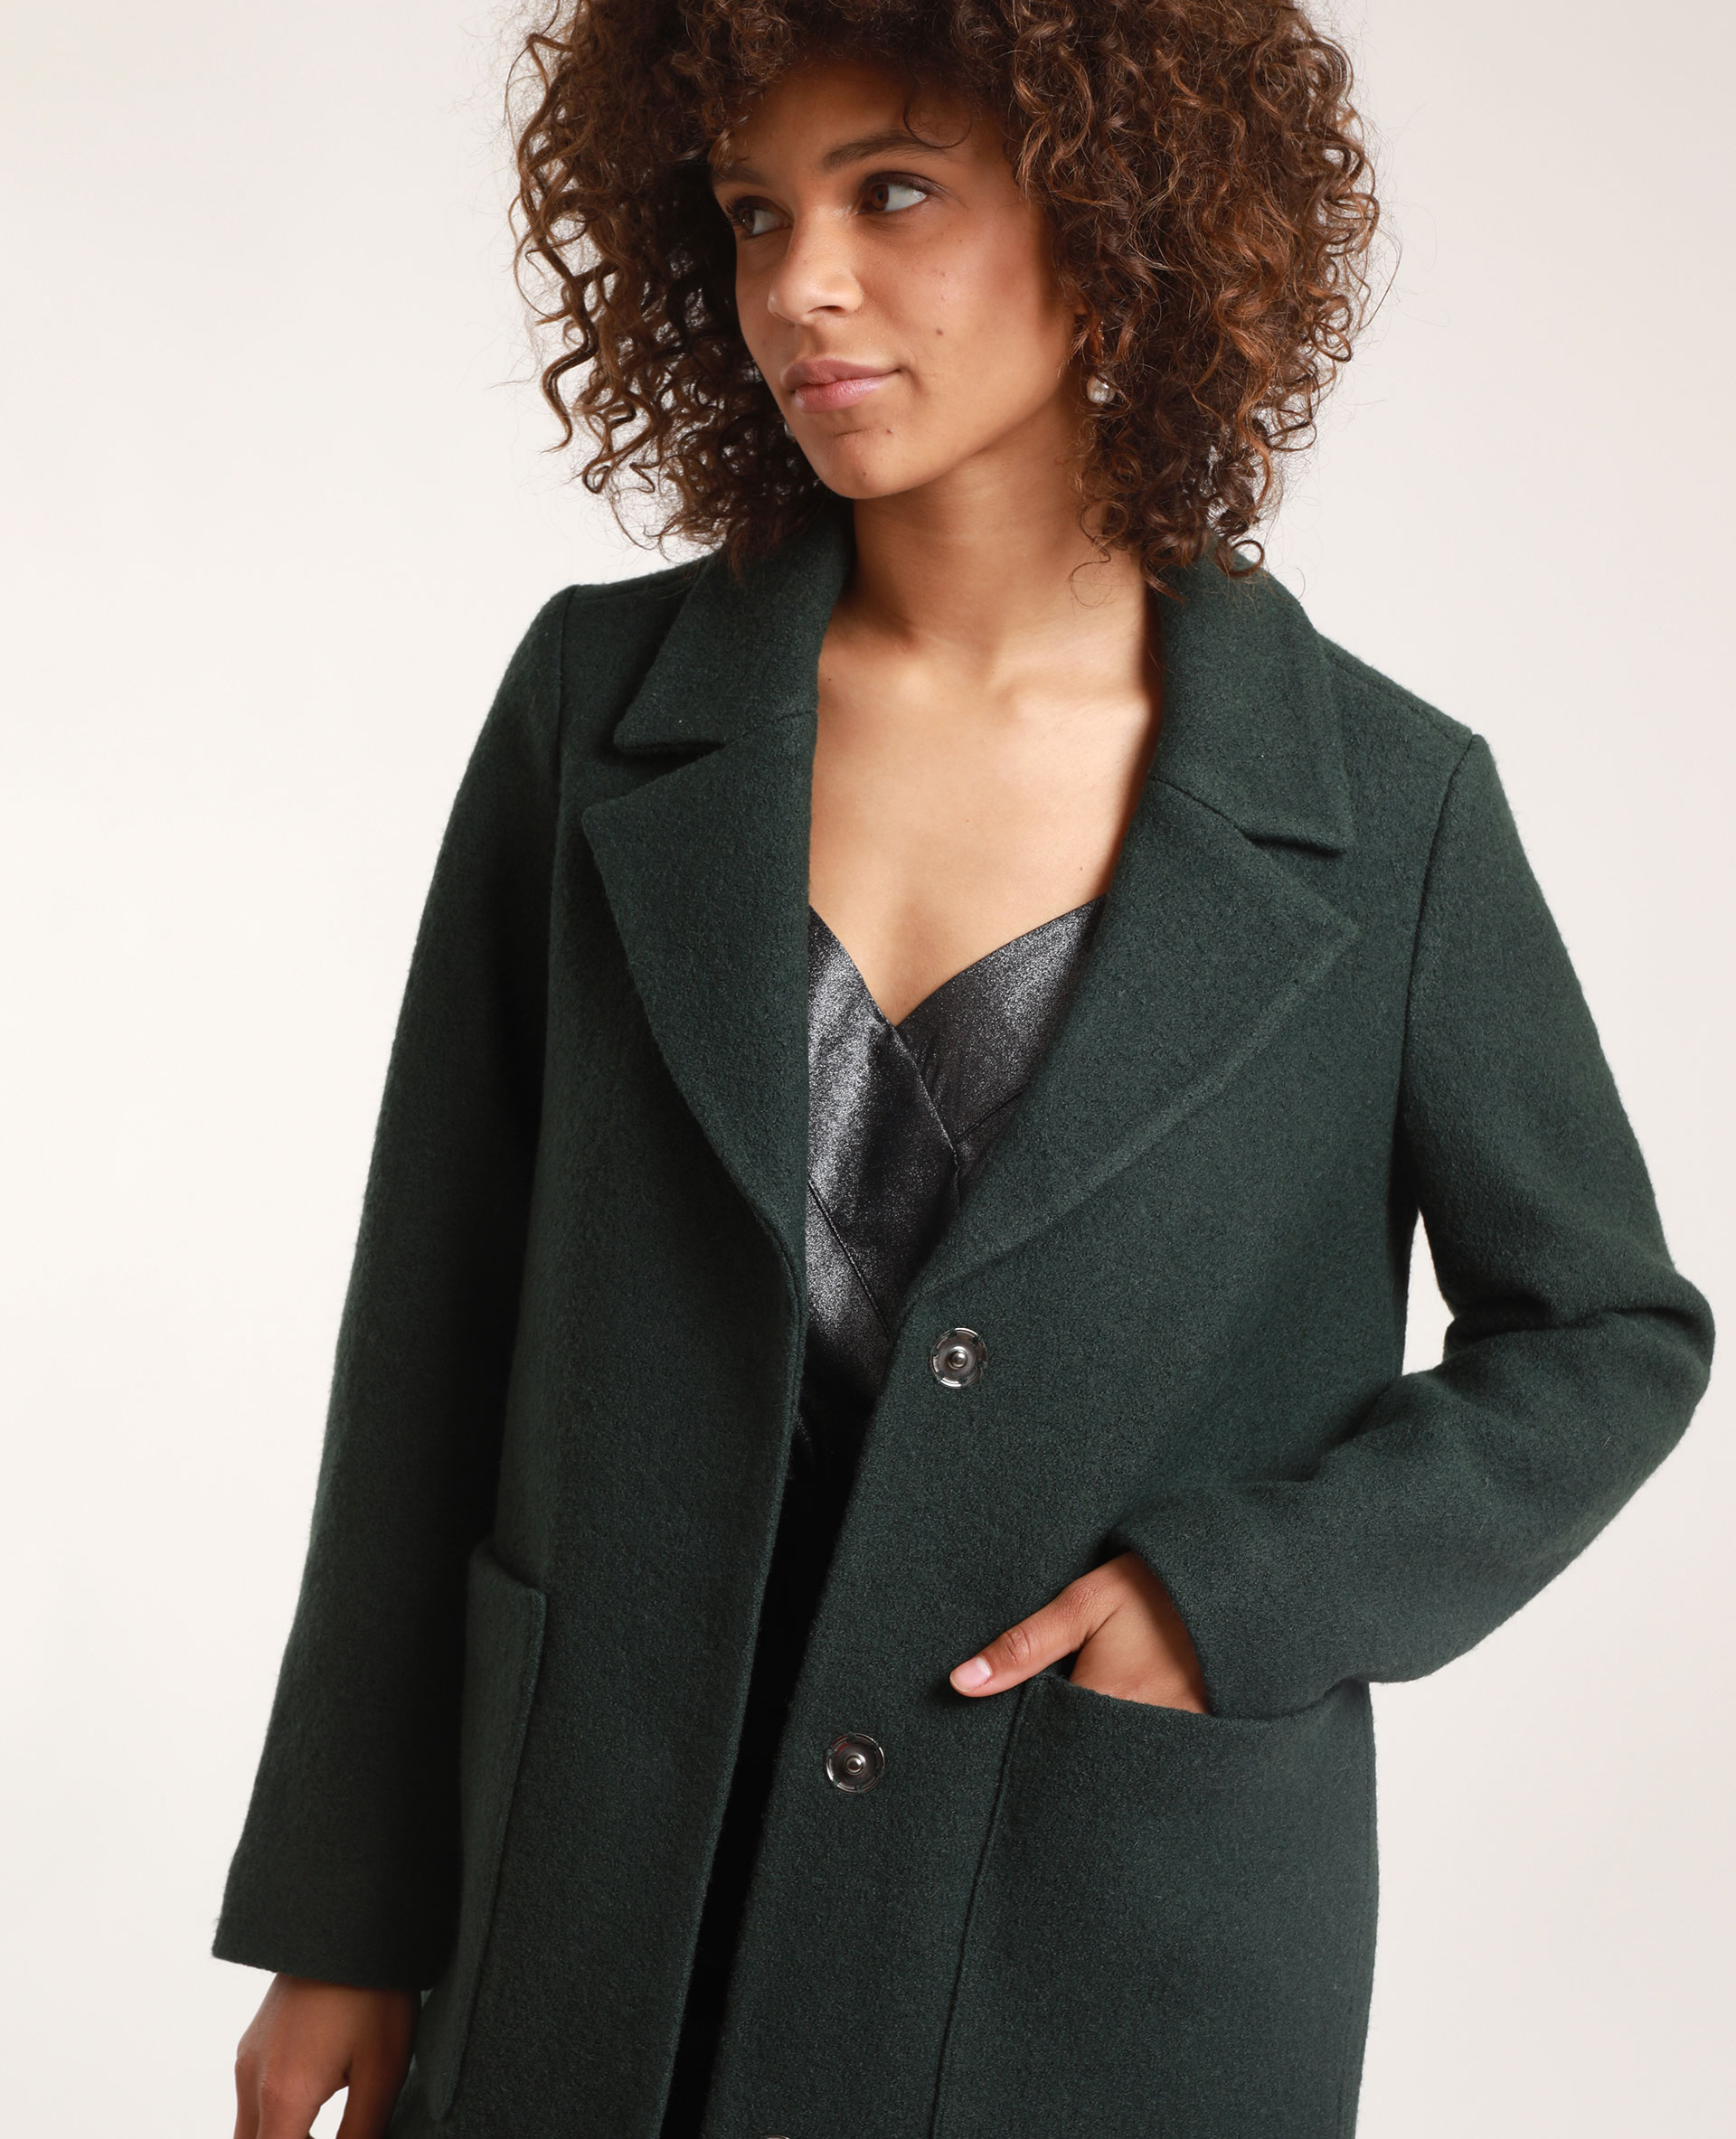 manteau femme vert laine